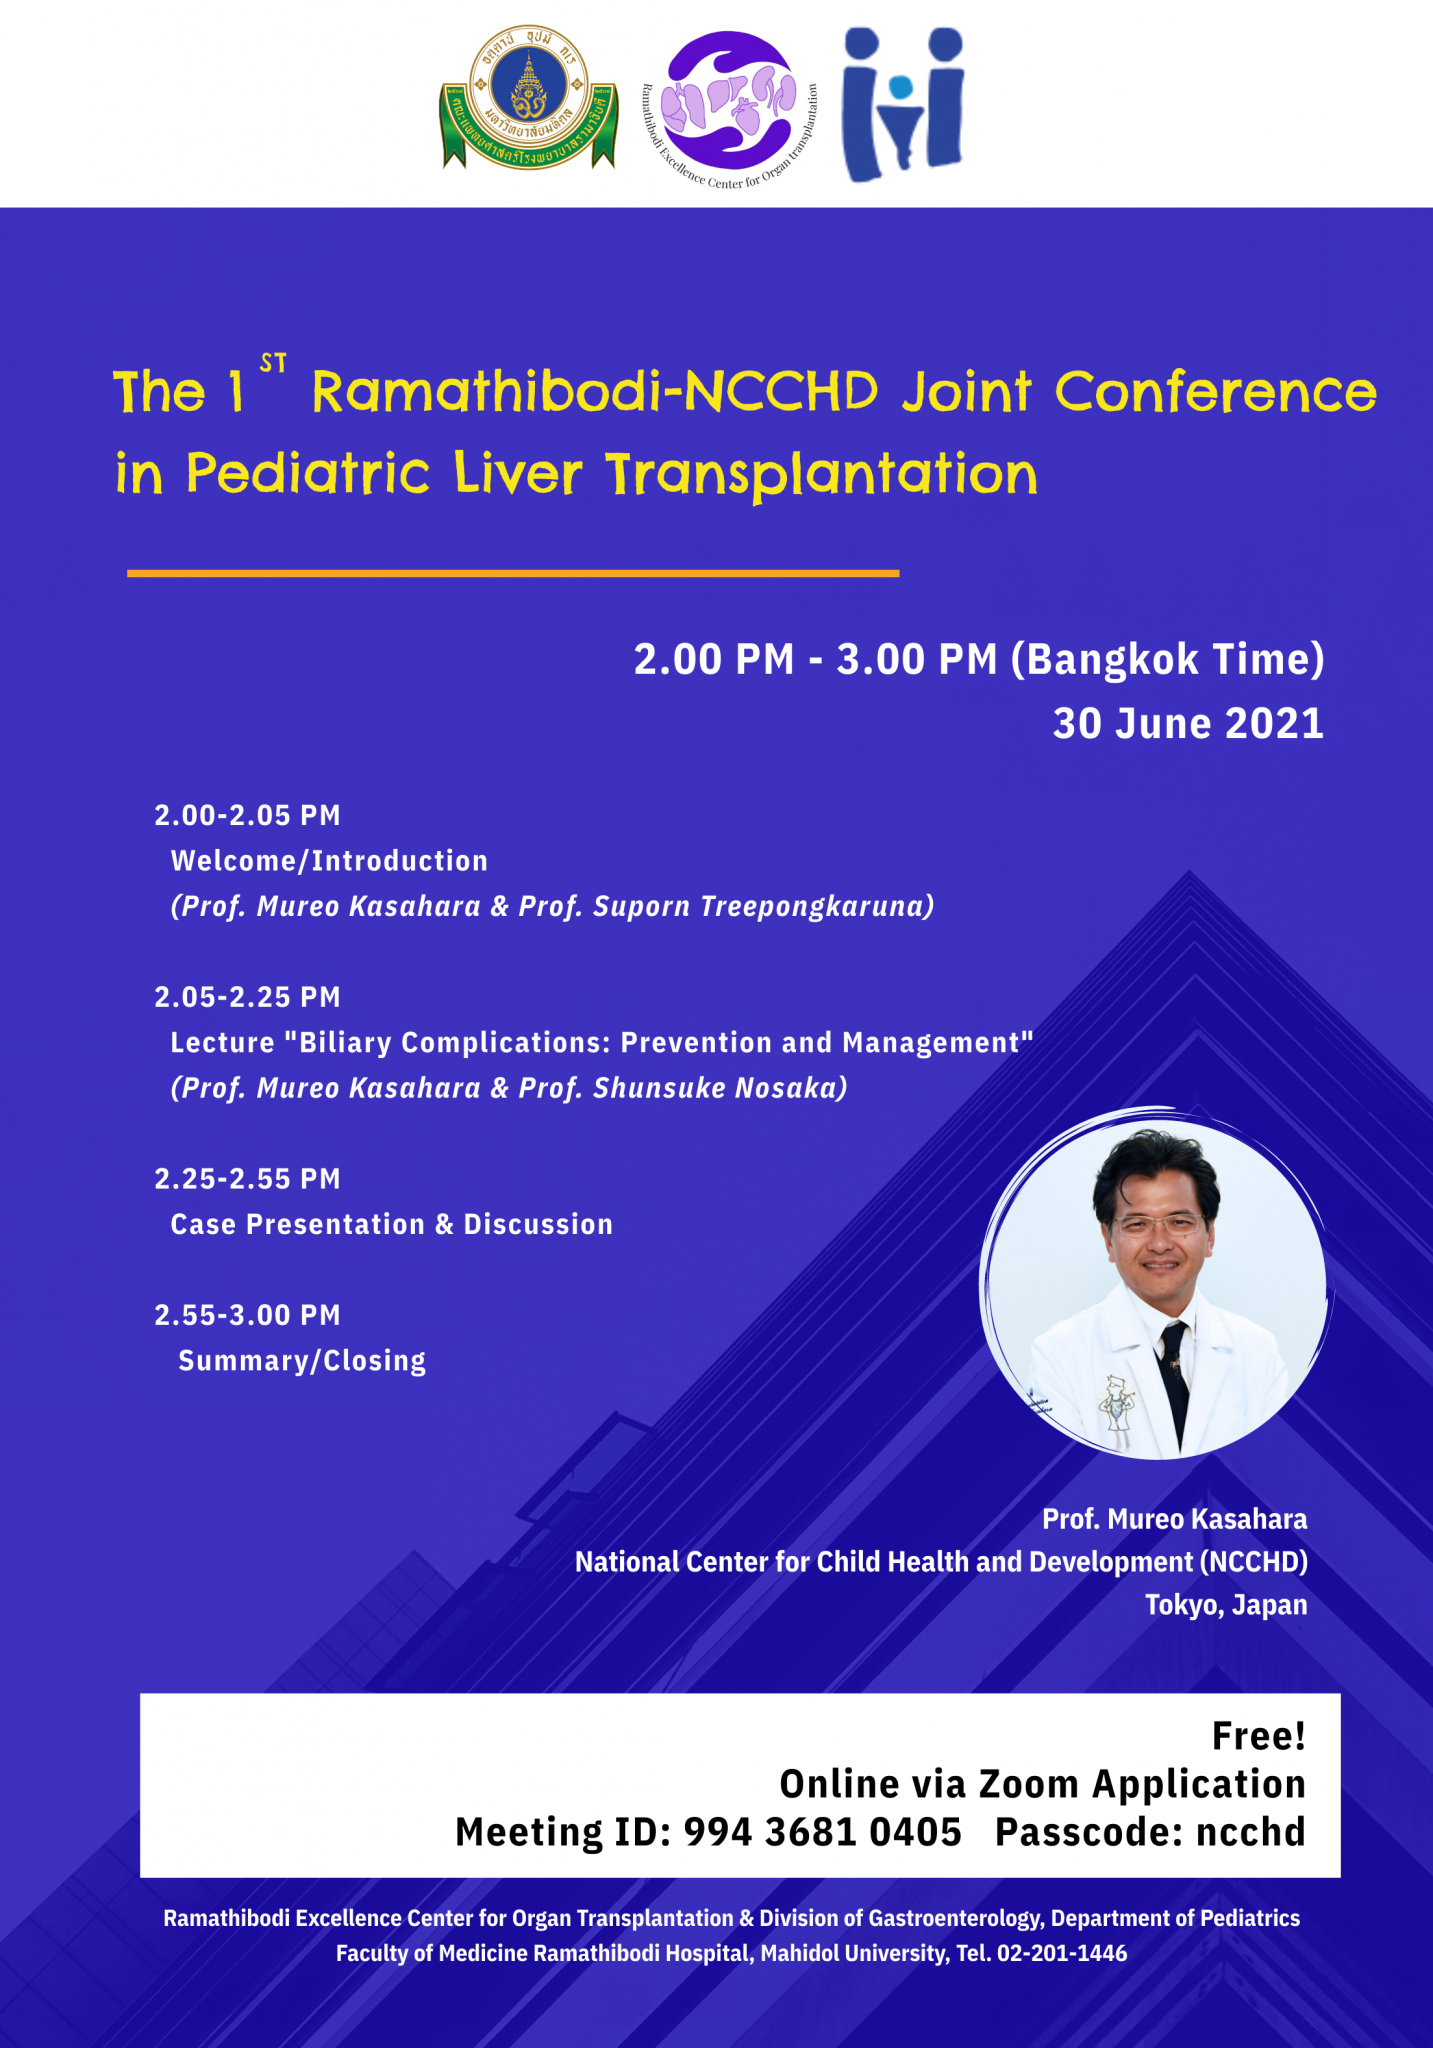 The 1ST Ramathibodi-NCCHD Joint Conference in Pediatric Liver Transplantation